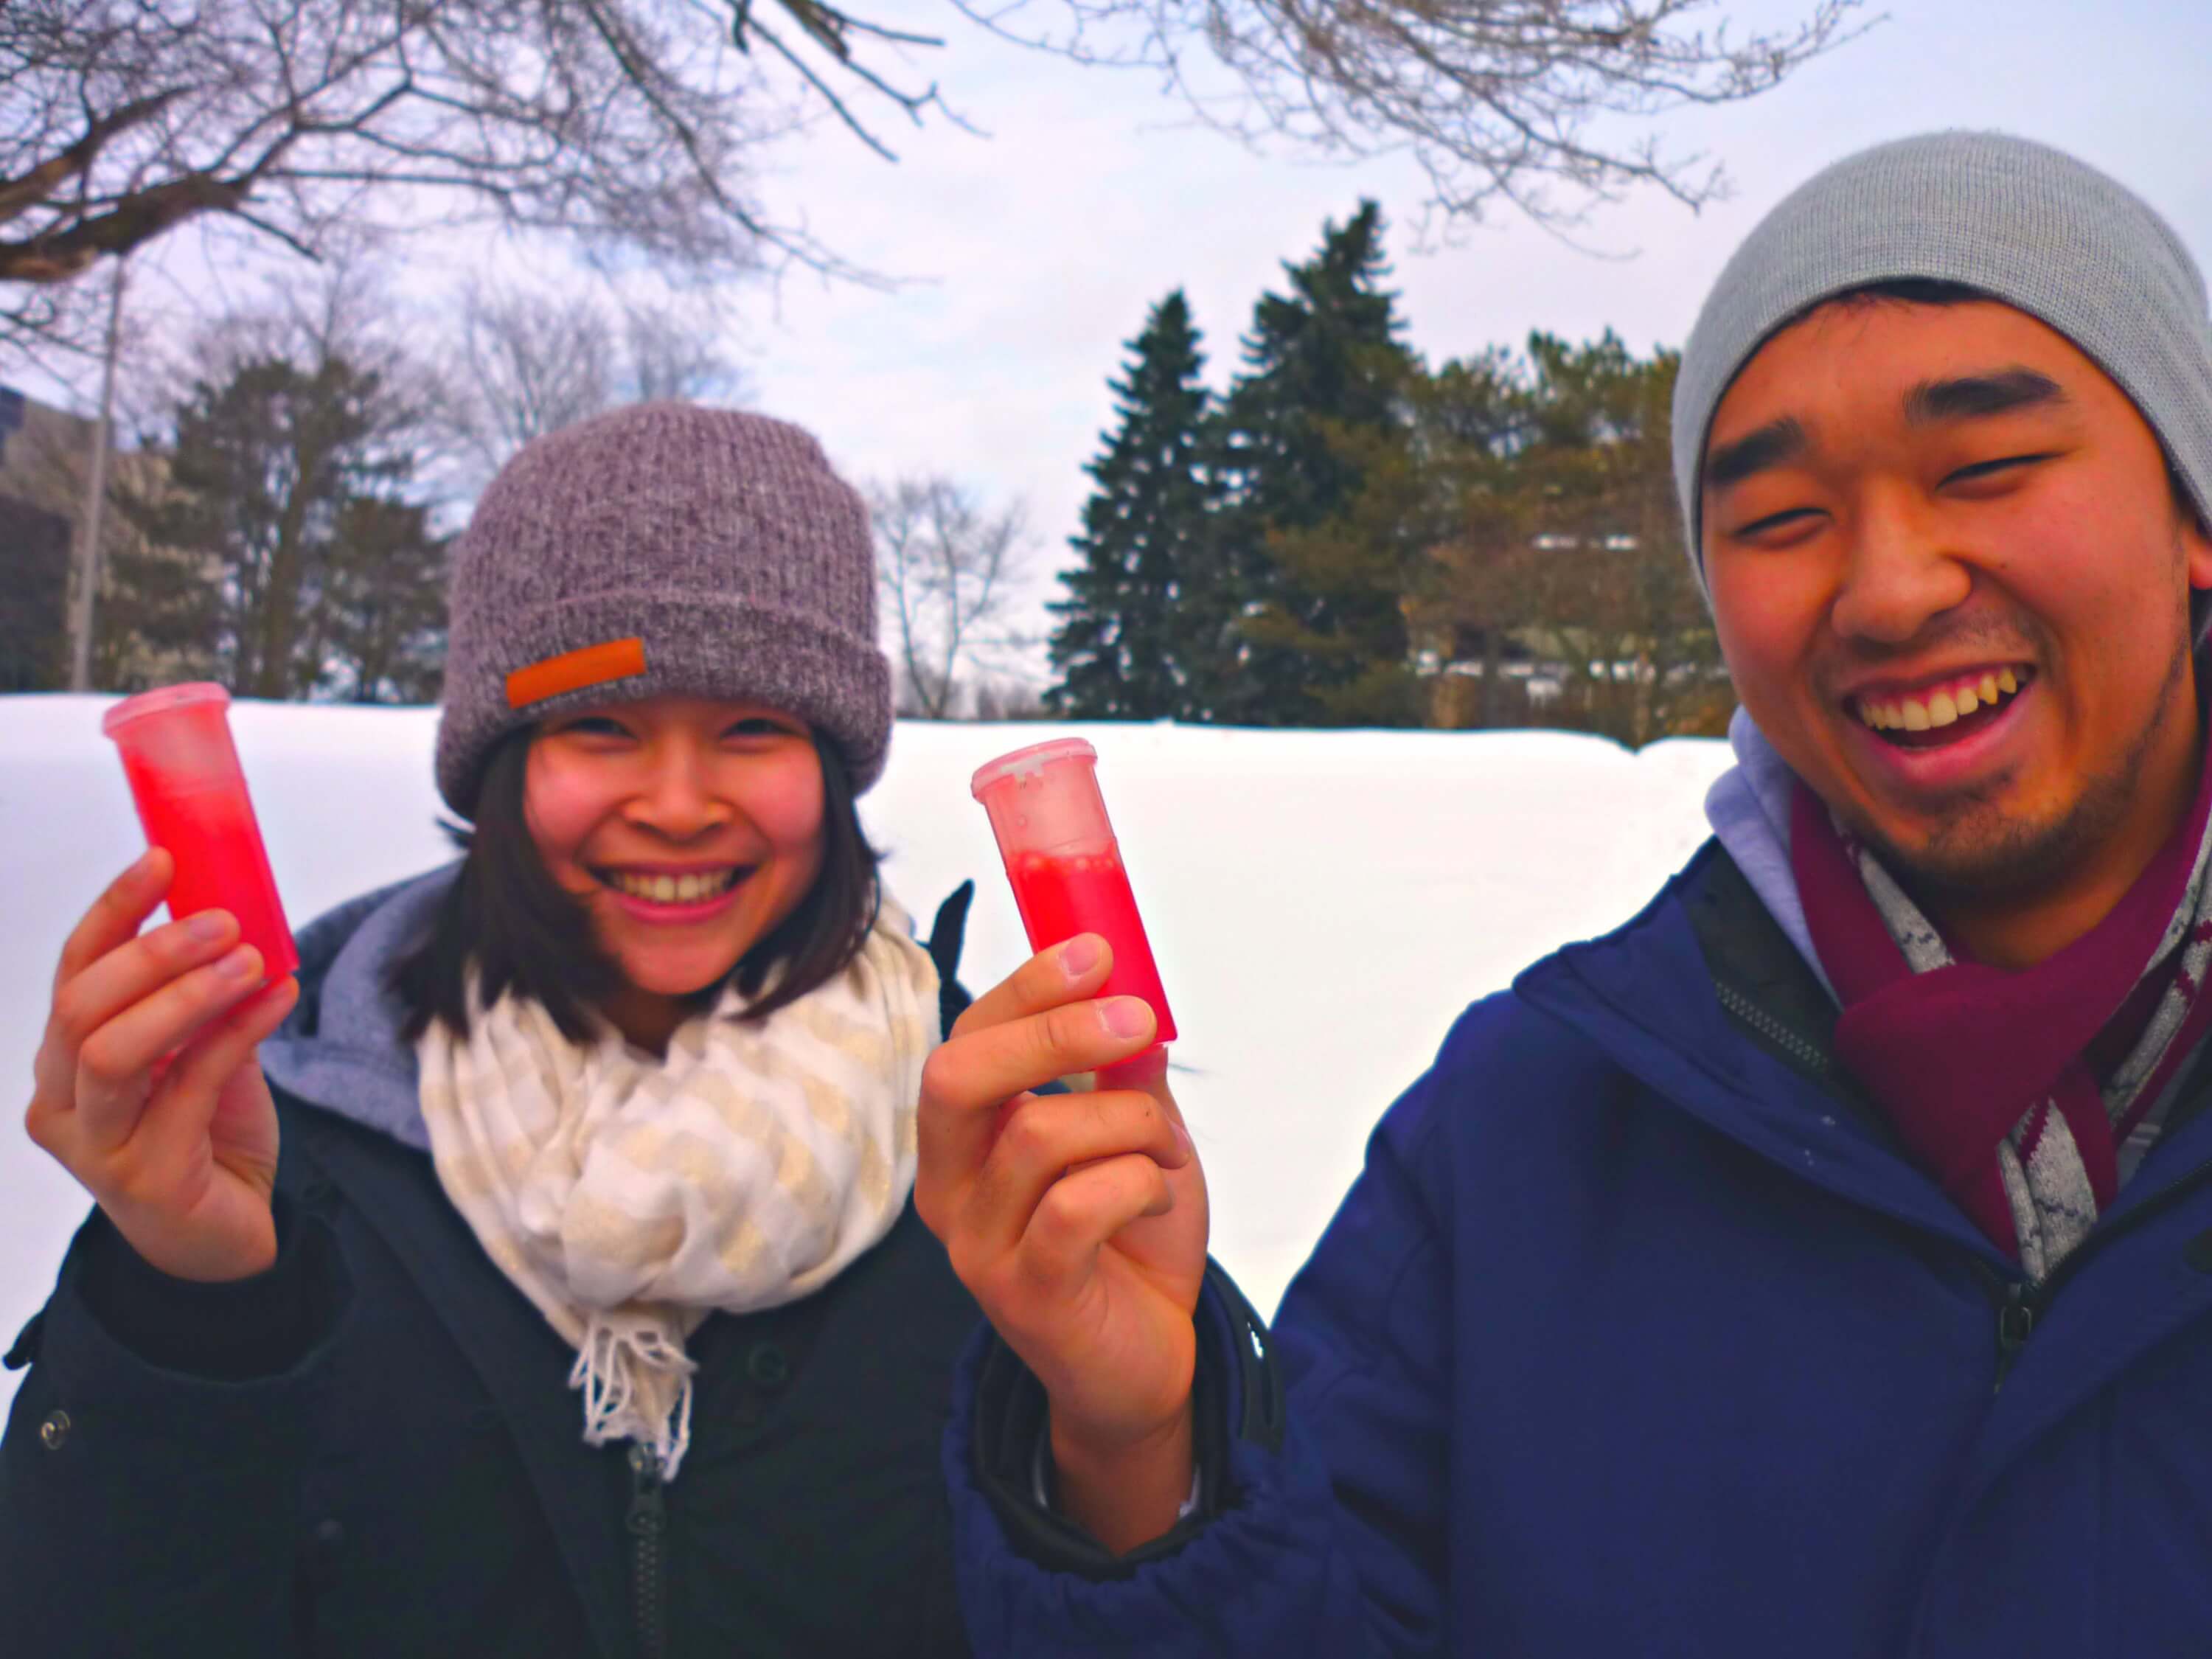 Students happy holding red liquid